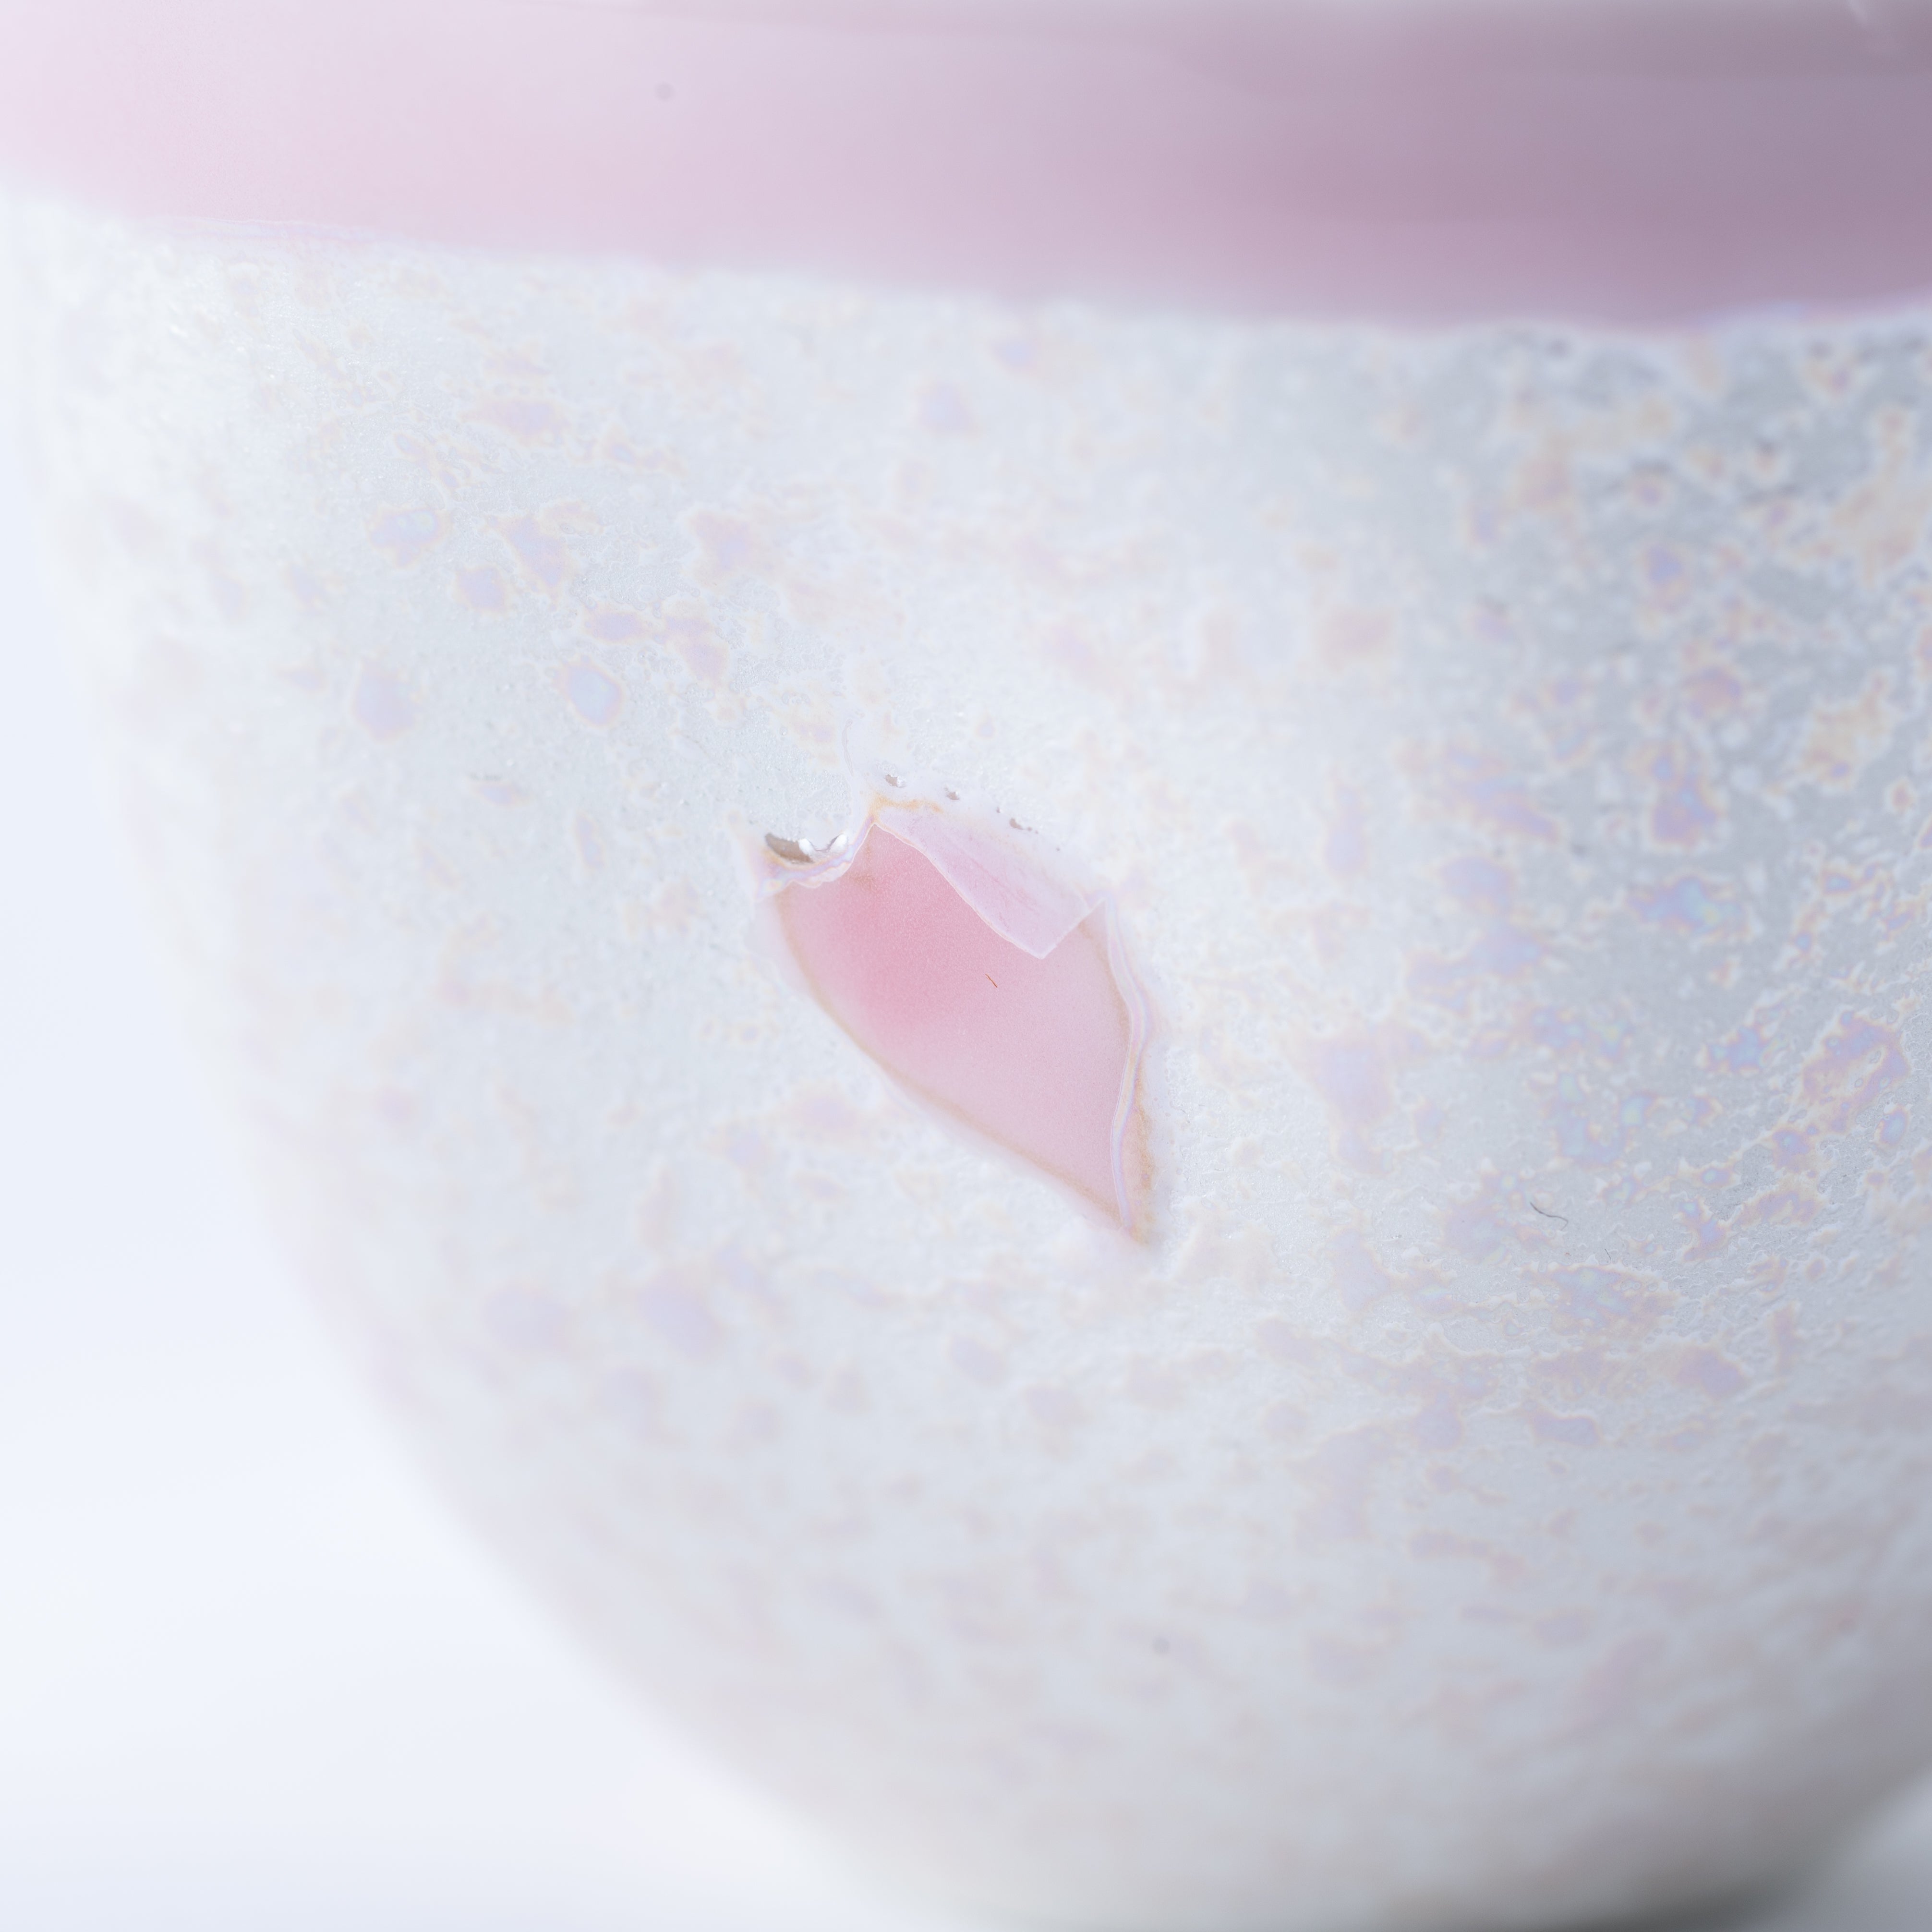 Tasei Kiln Lustrous Pink Sakura Arita Ware Guinomi Sake Cup